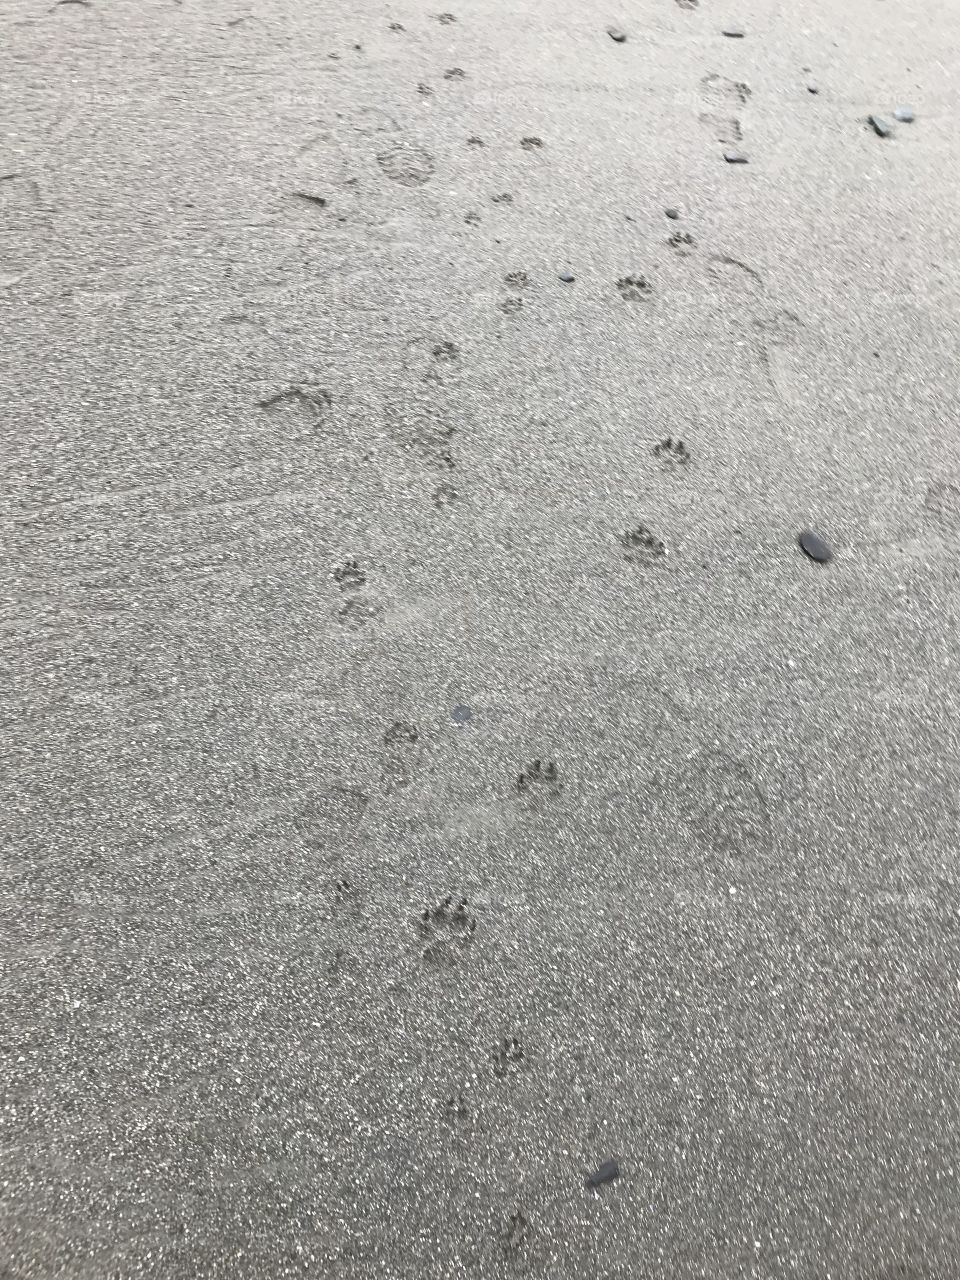 Dog prints on beach 